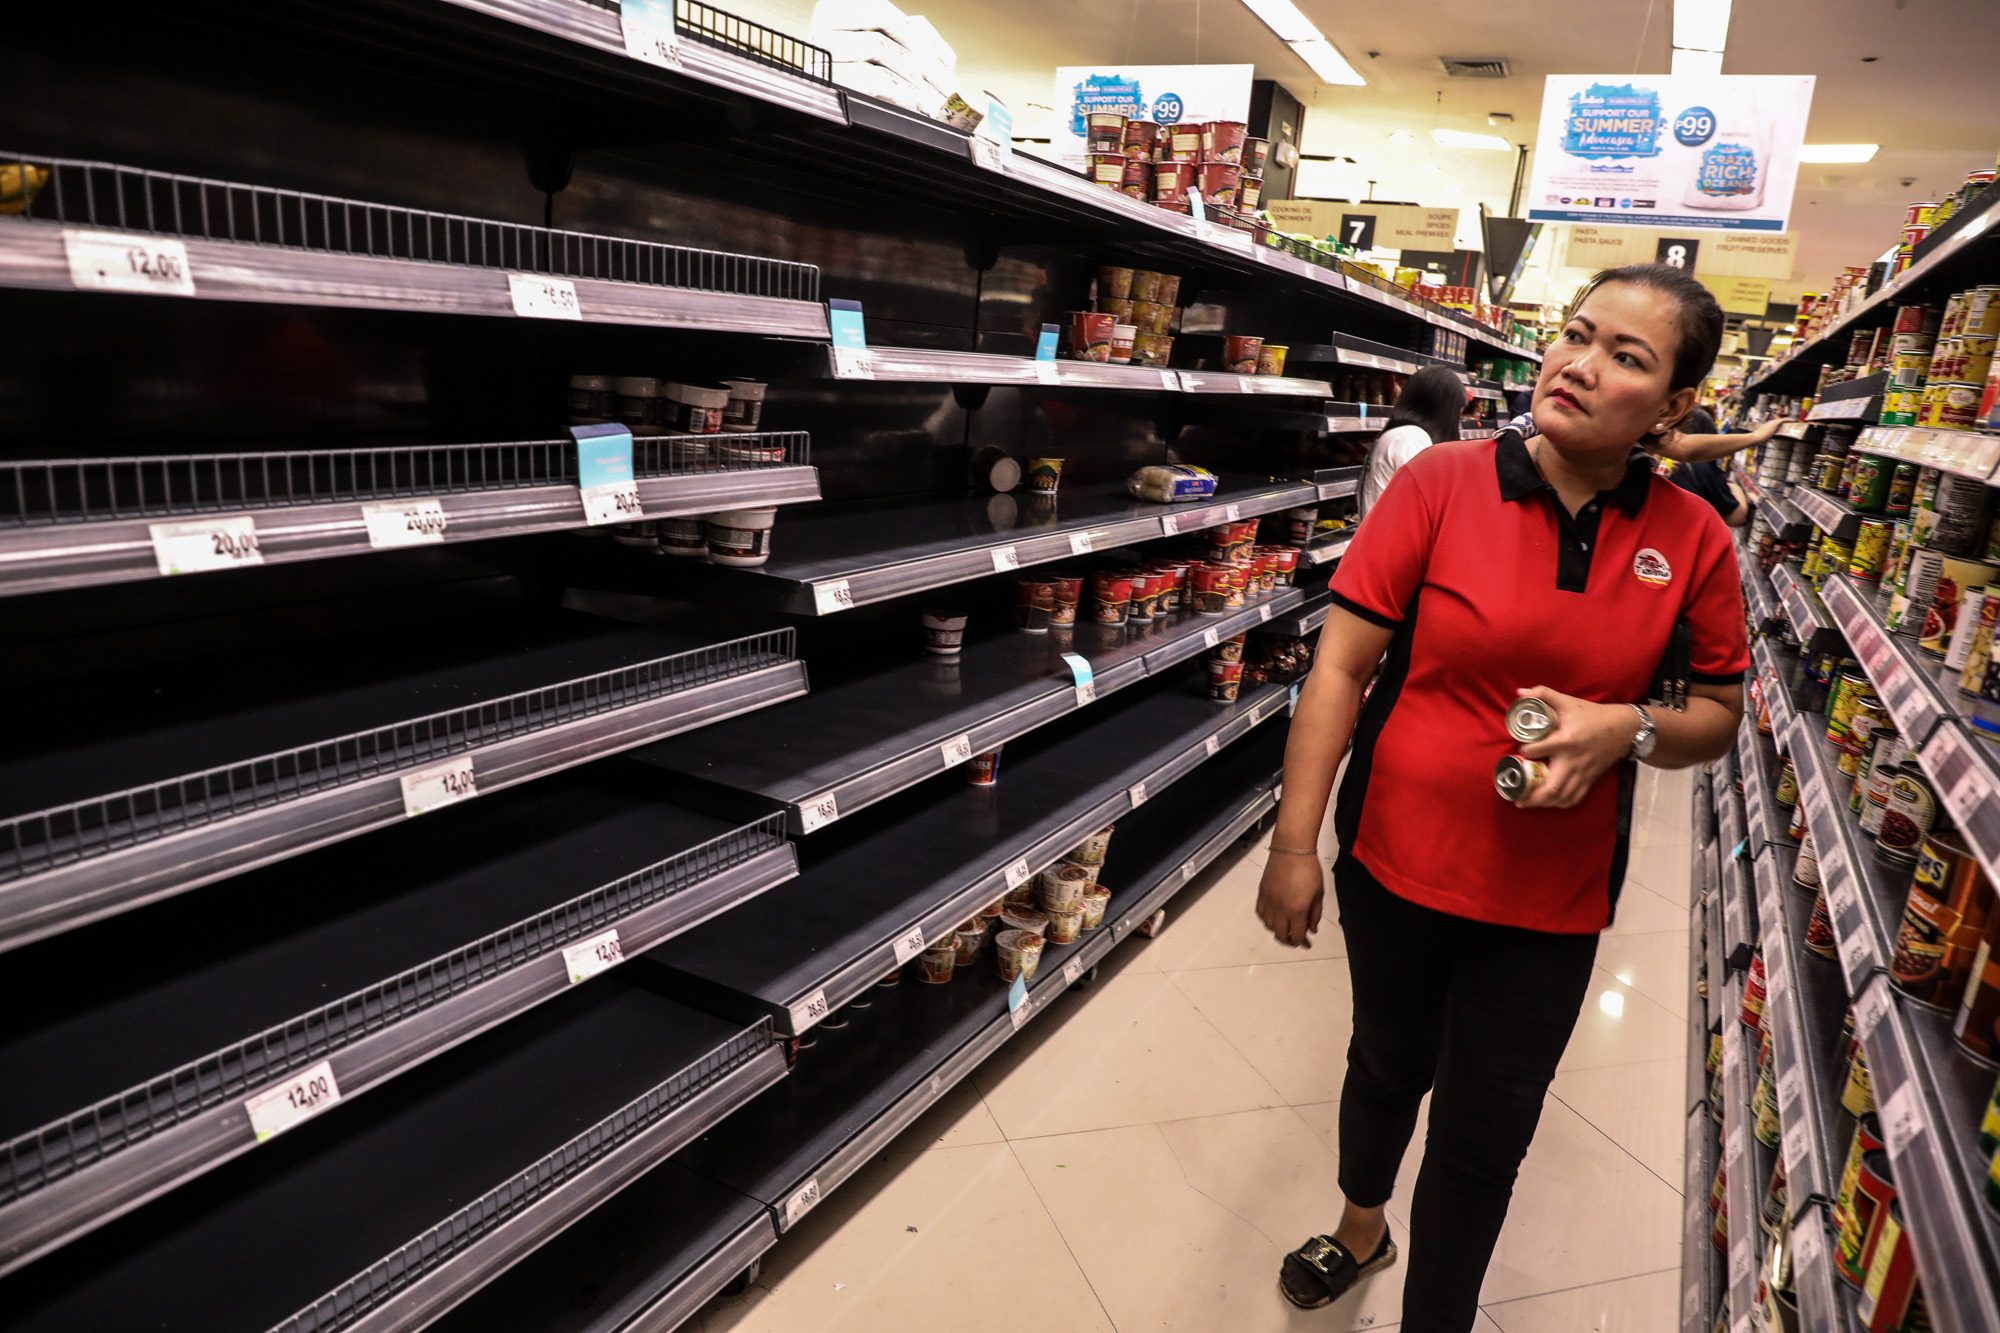 Philippines braces for recession due to coronavirus